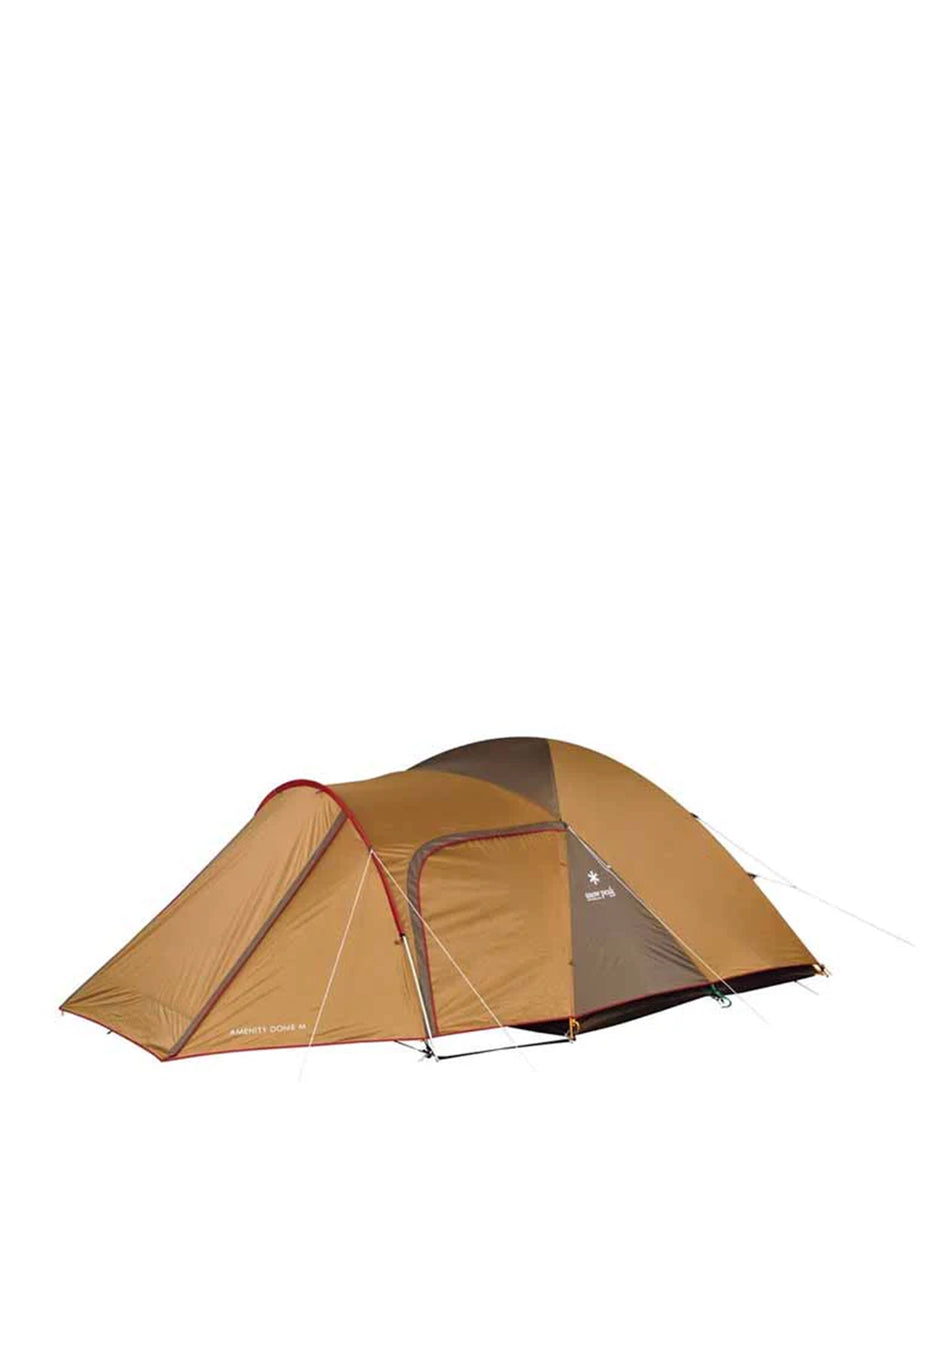 Snow Peak Amenity Dome M Tent - First Camp Rental